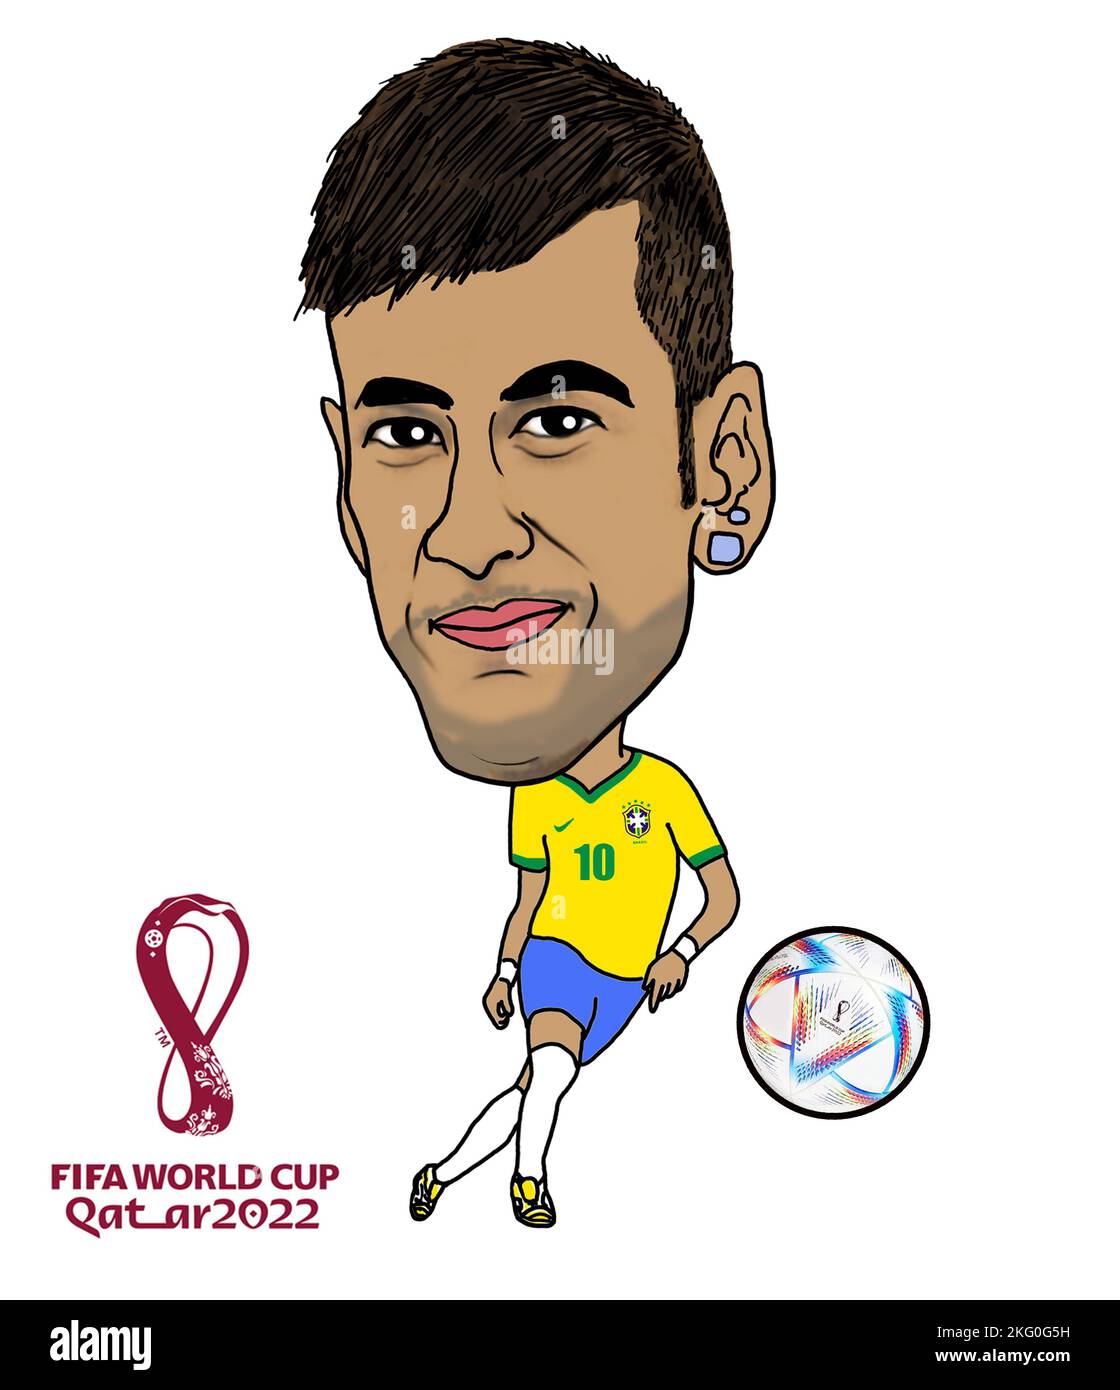 SHANGHAI, CHINA - NOVEMBER 21, 2022 - Qatar 2022 FIFA World Cup star comic: Neymar (Brasil), drawn on November 21, 2022 in Shanghai, China. Stock Photo